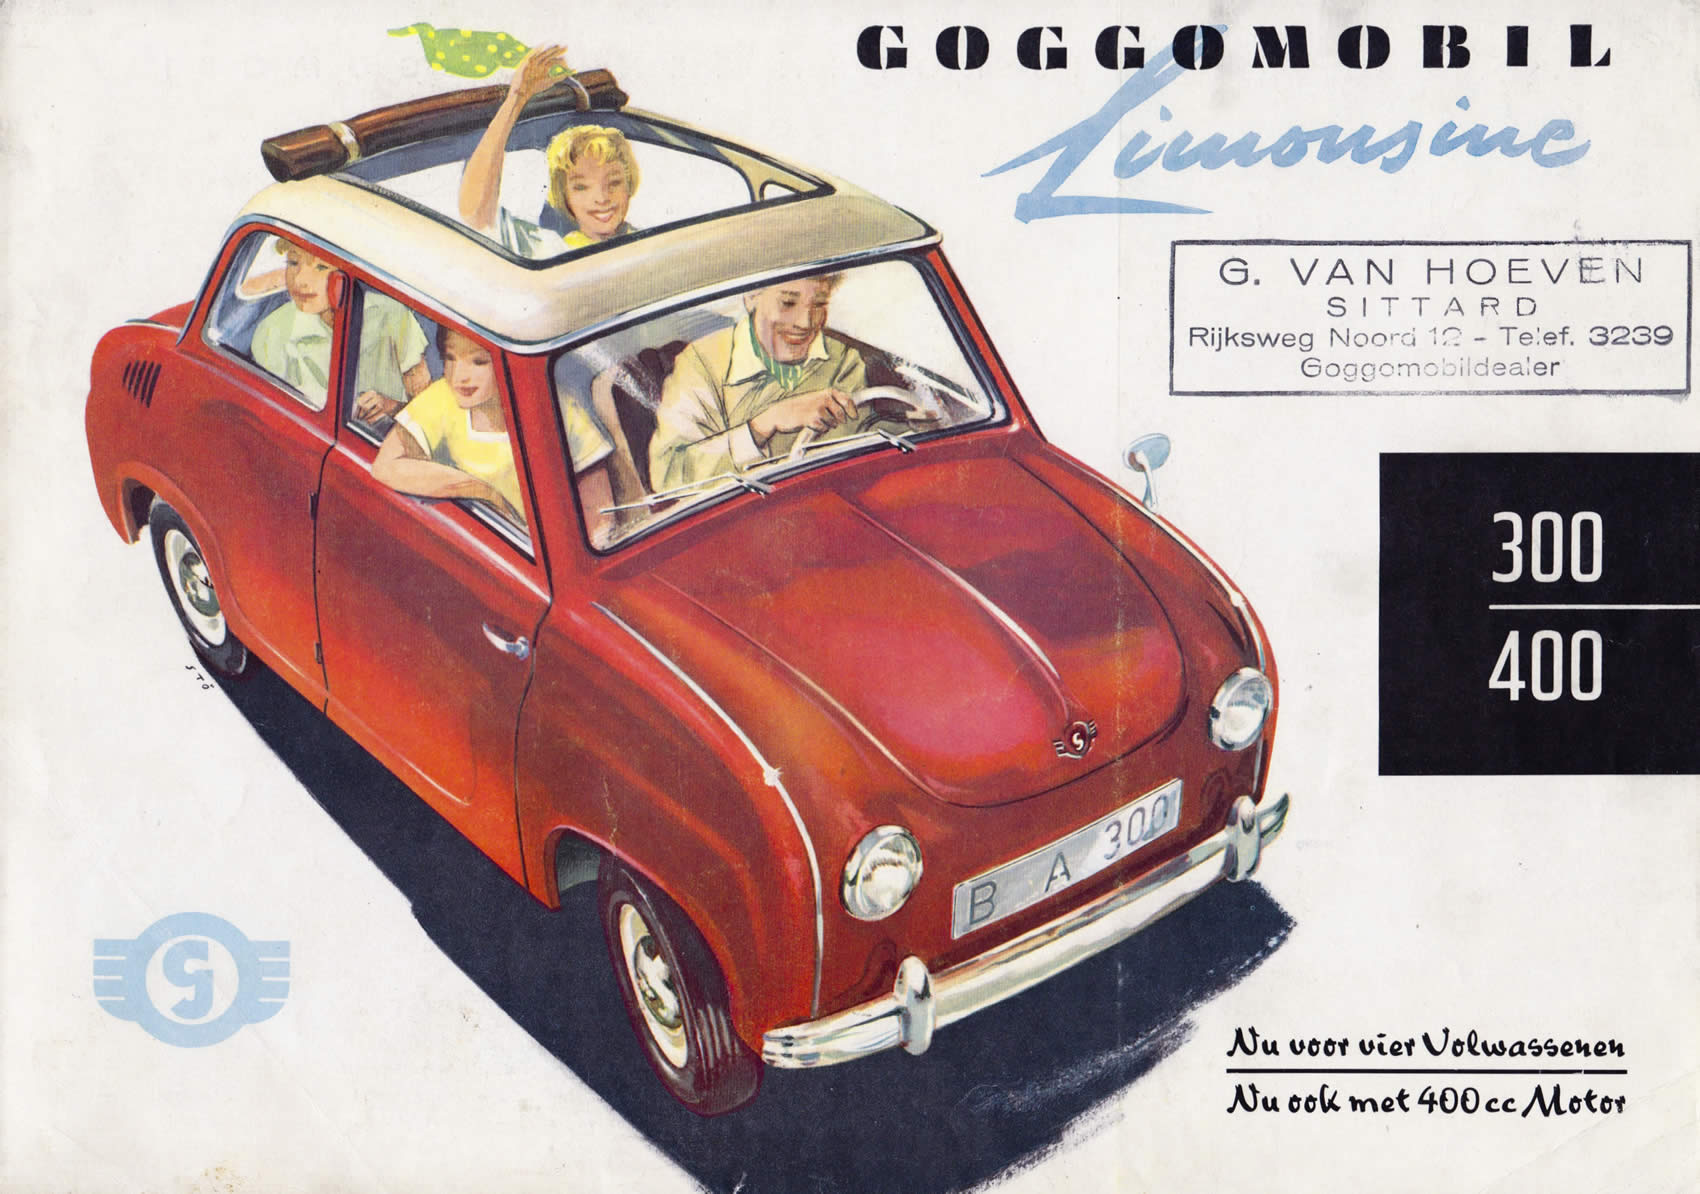 Goggomobil Limousine sales brochure cover 1958